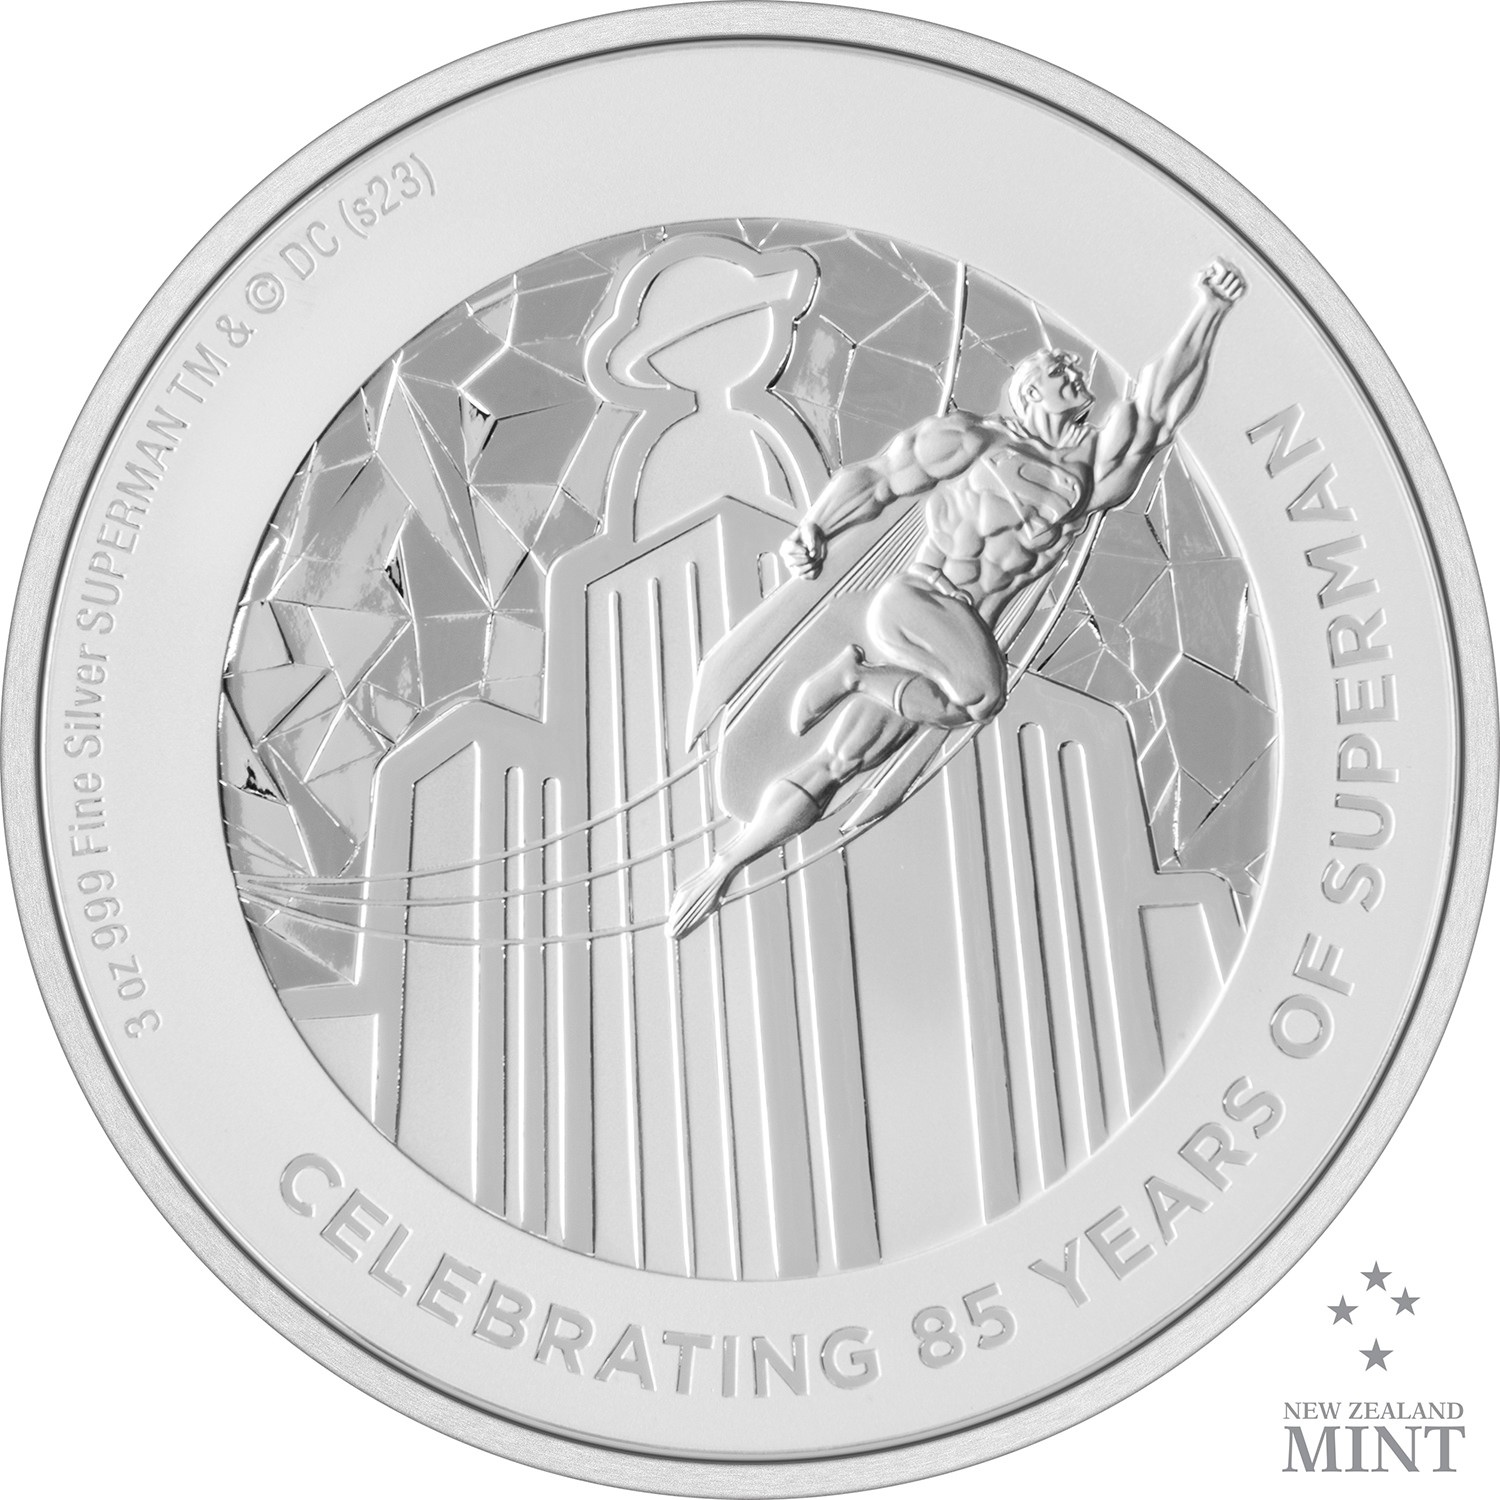 Superman 85th Anniversary 3oz Silver Coin (Prototype Shown) View 2